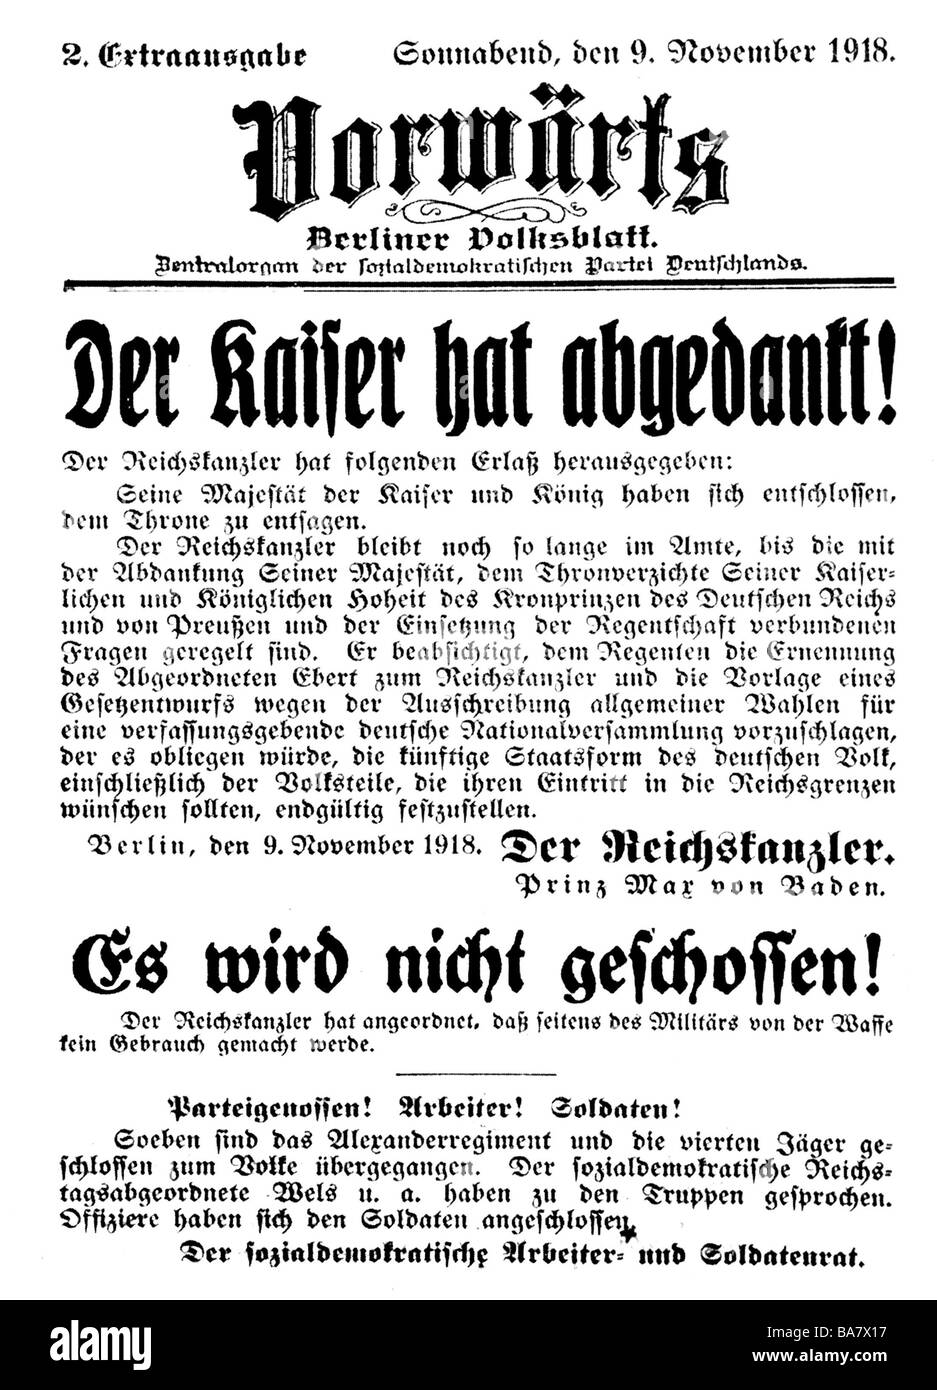 events, First World War / WW I, end of War, abdication of the German Emperor William II, headline: "Der Kaiser hat abgedankt" (The Emperor has abdicated), newspaper "Vorwärts", Berlin, 9.11.1918, Stock Photo